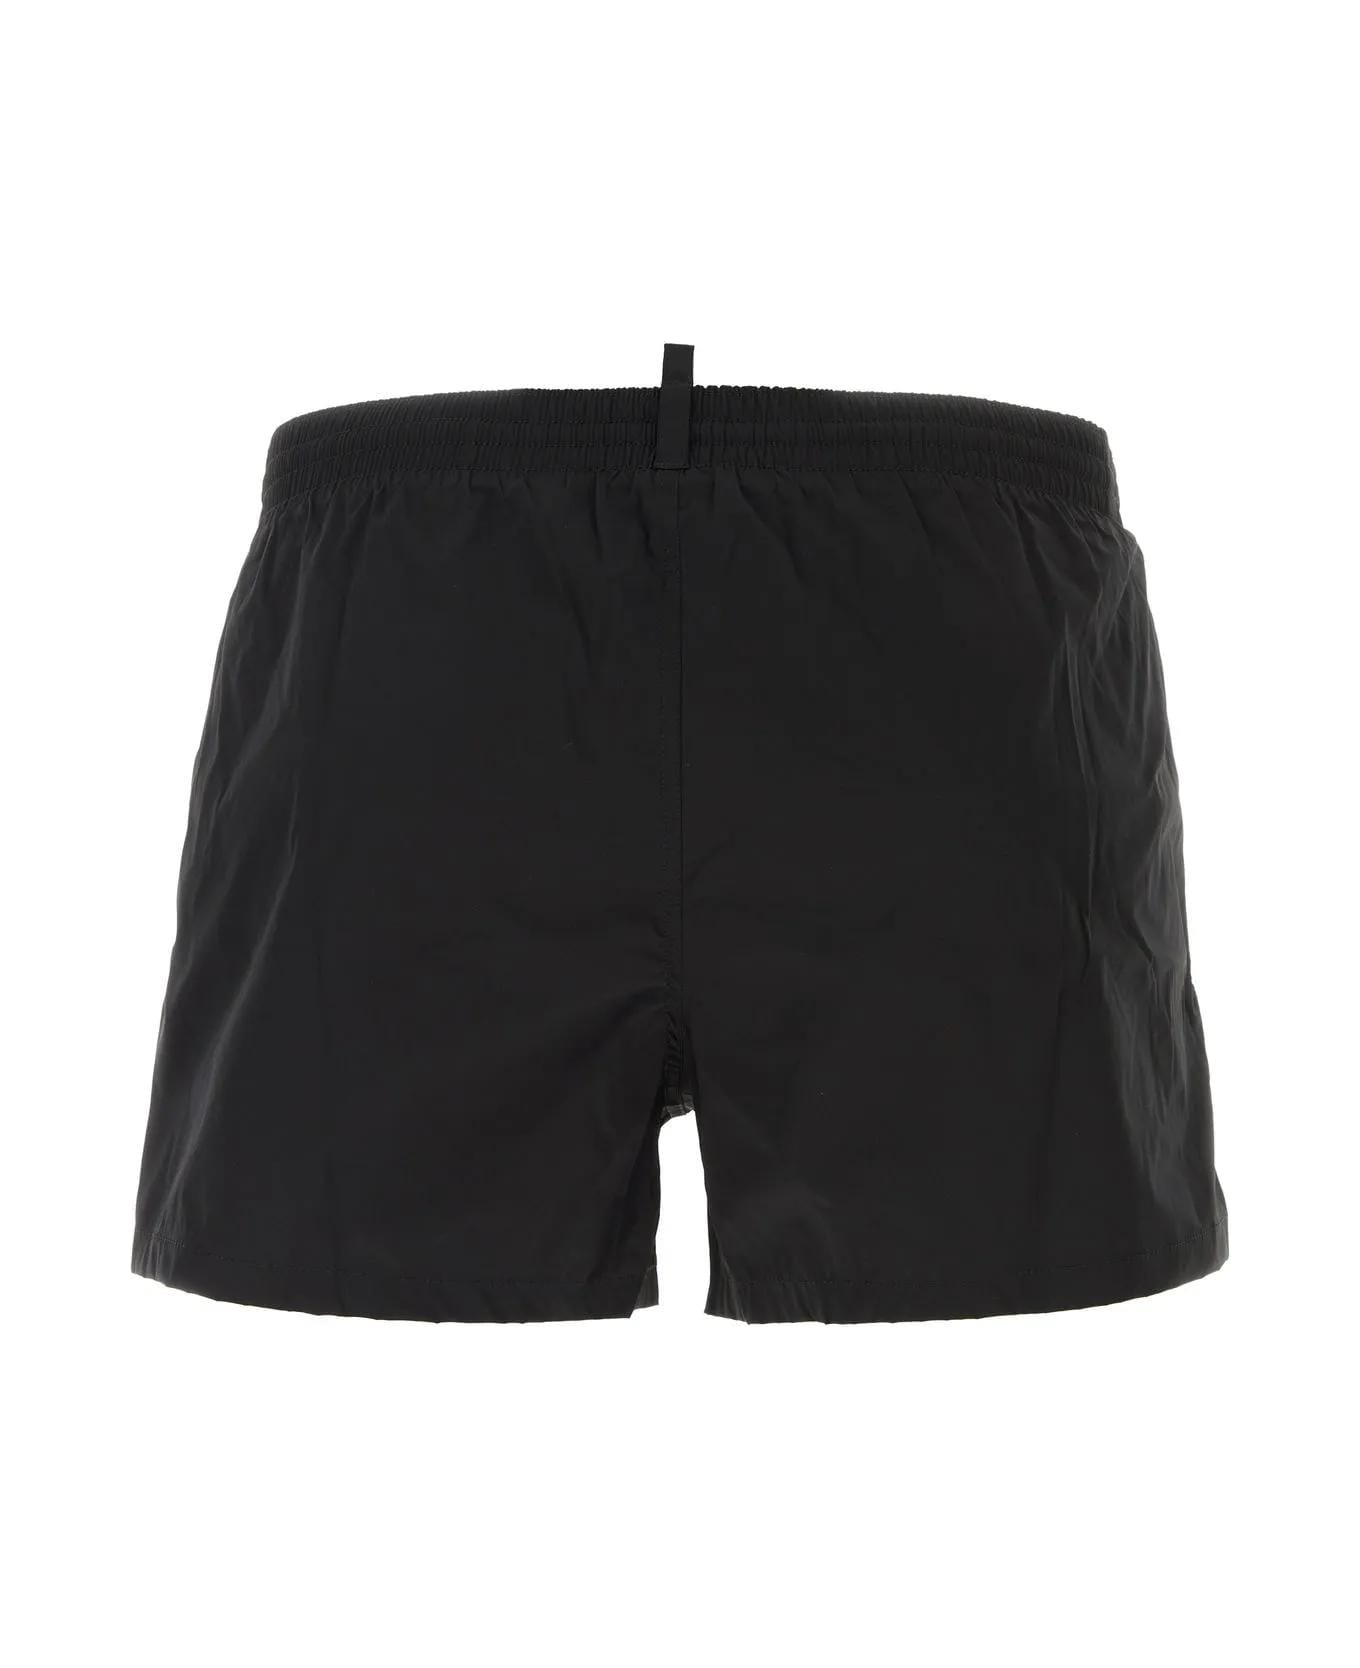 Dsquared2 Black Stretch Nylon Swimming Shorts - Black/red ショートパンツ